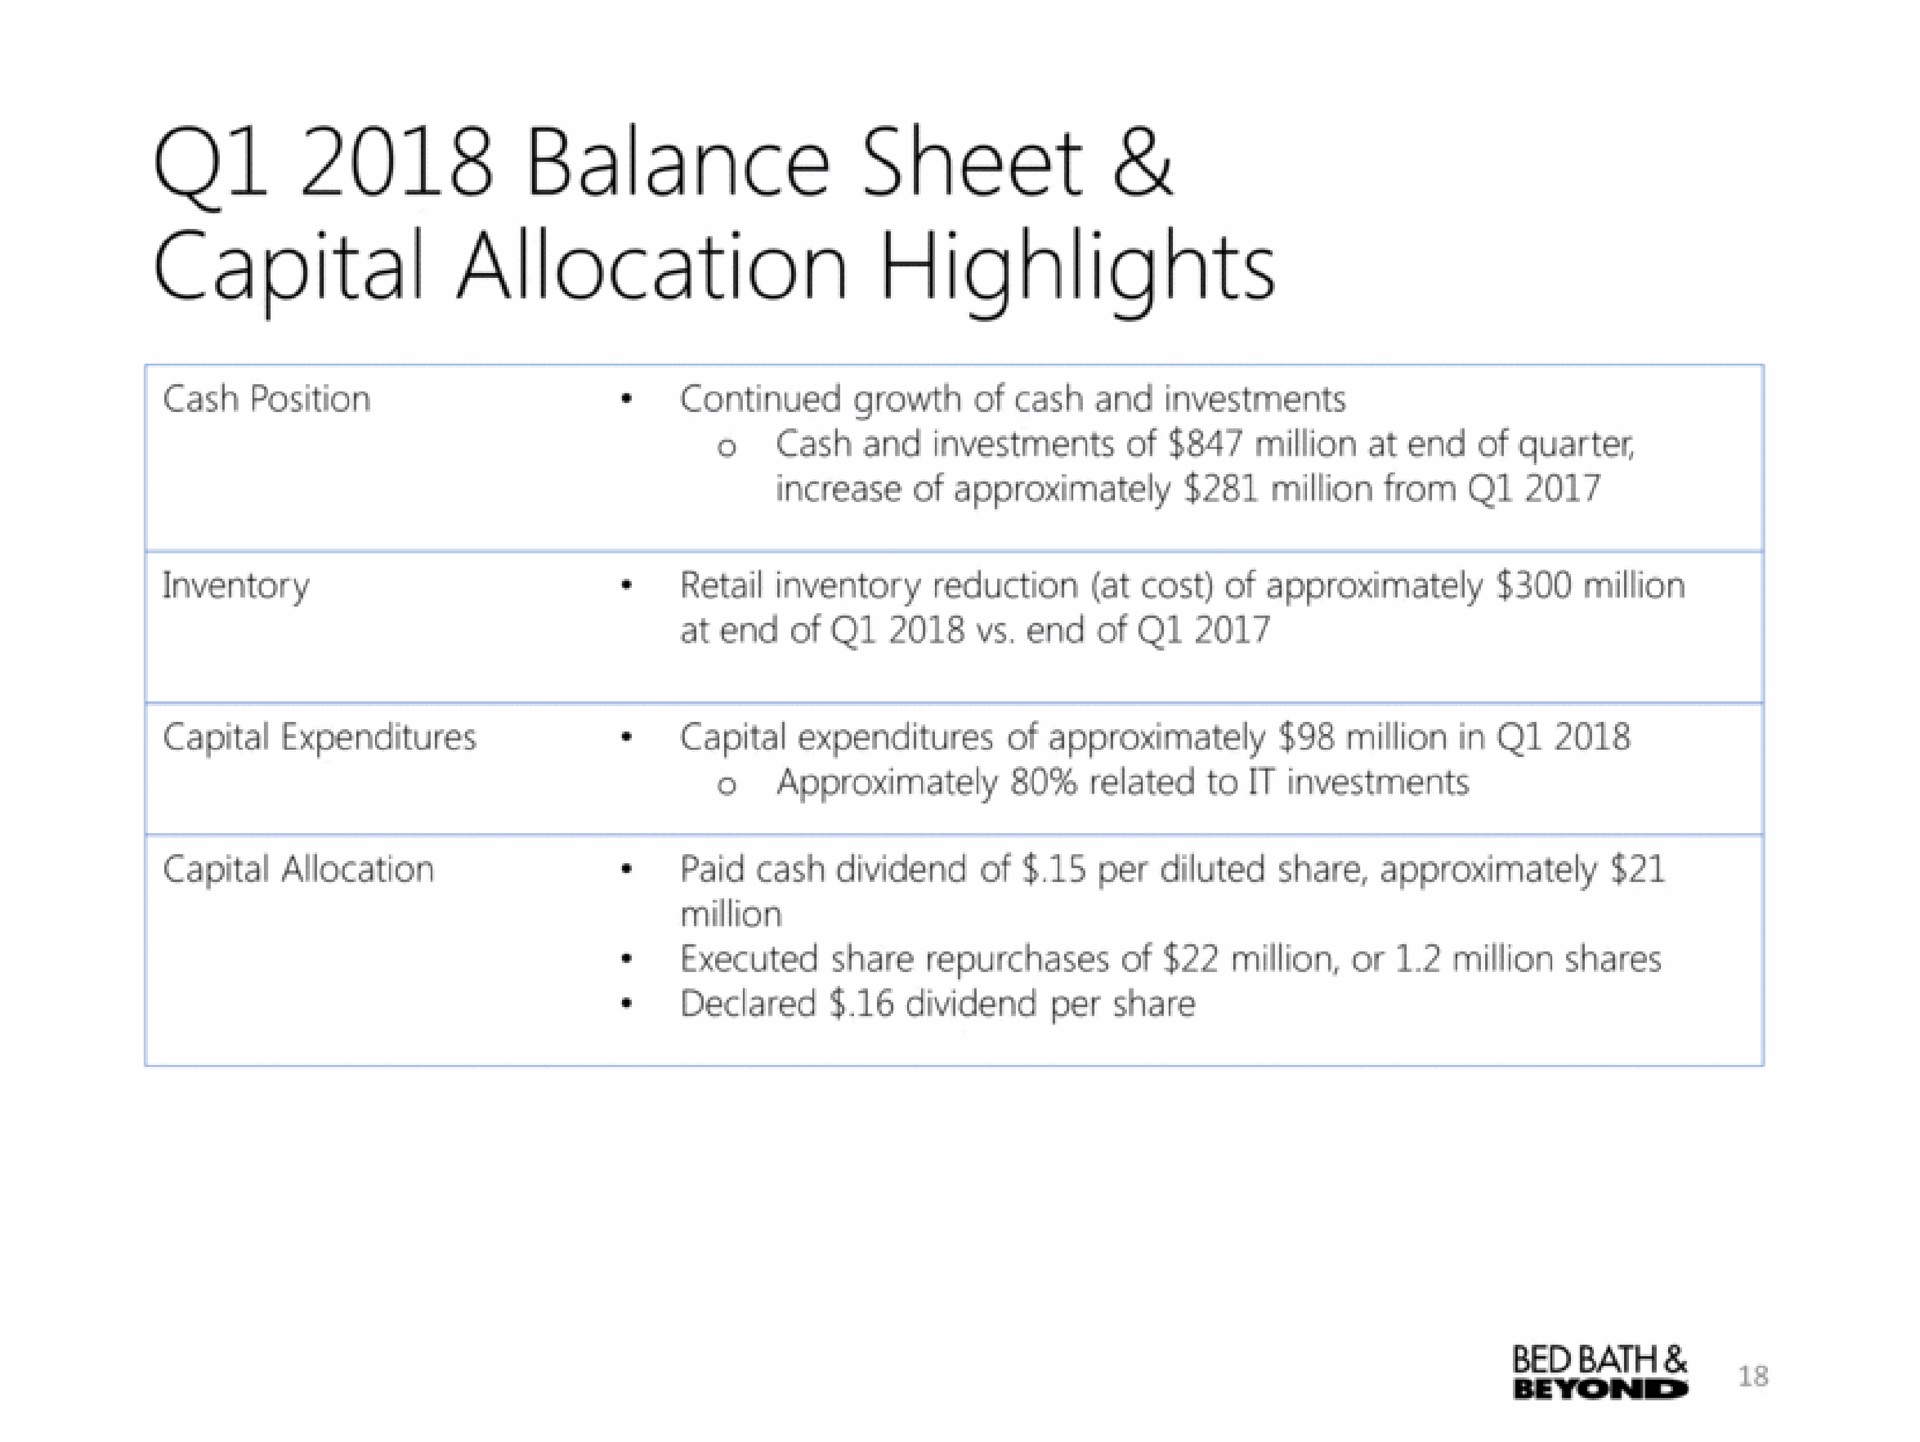 balance sheet capital allocation highlights | Bed Bath & Beyond